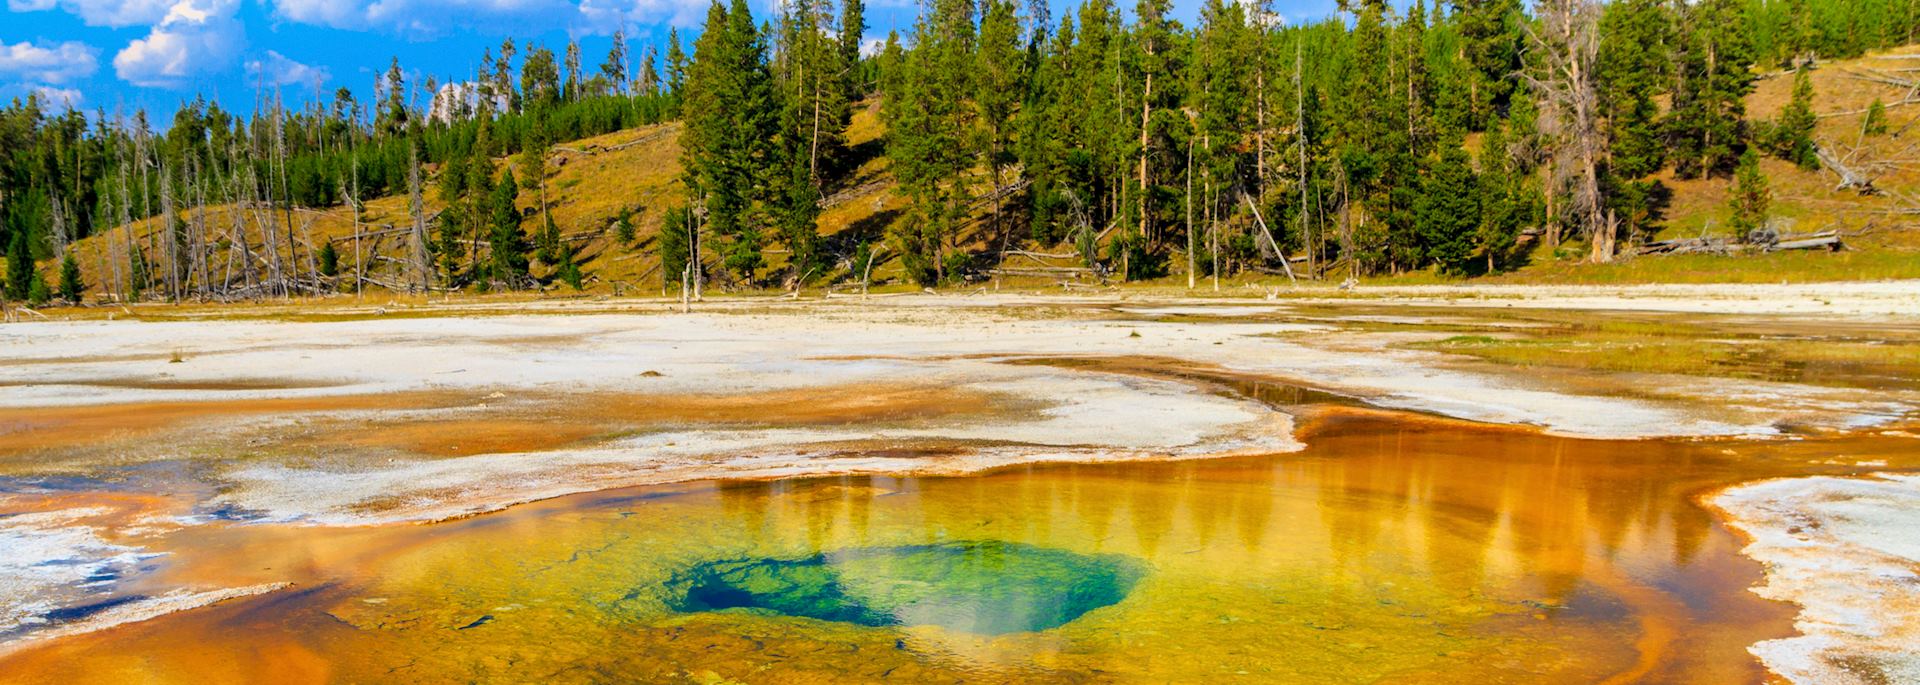 Chromatic Pool, Yellowstone National Park